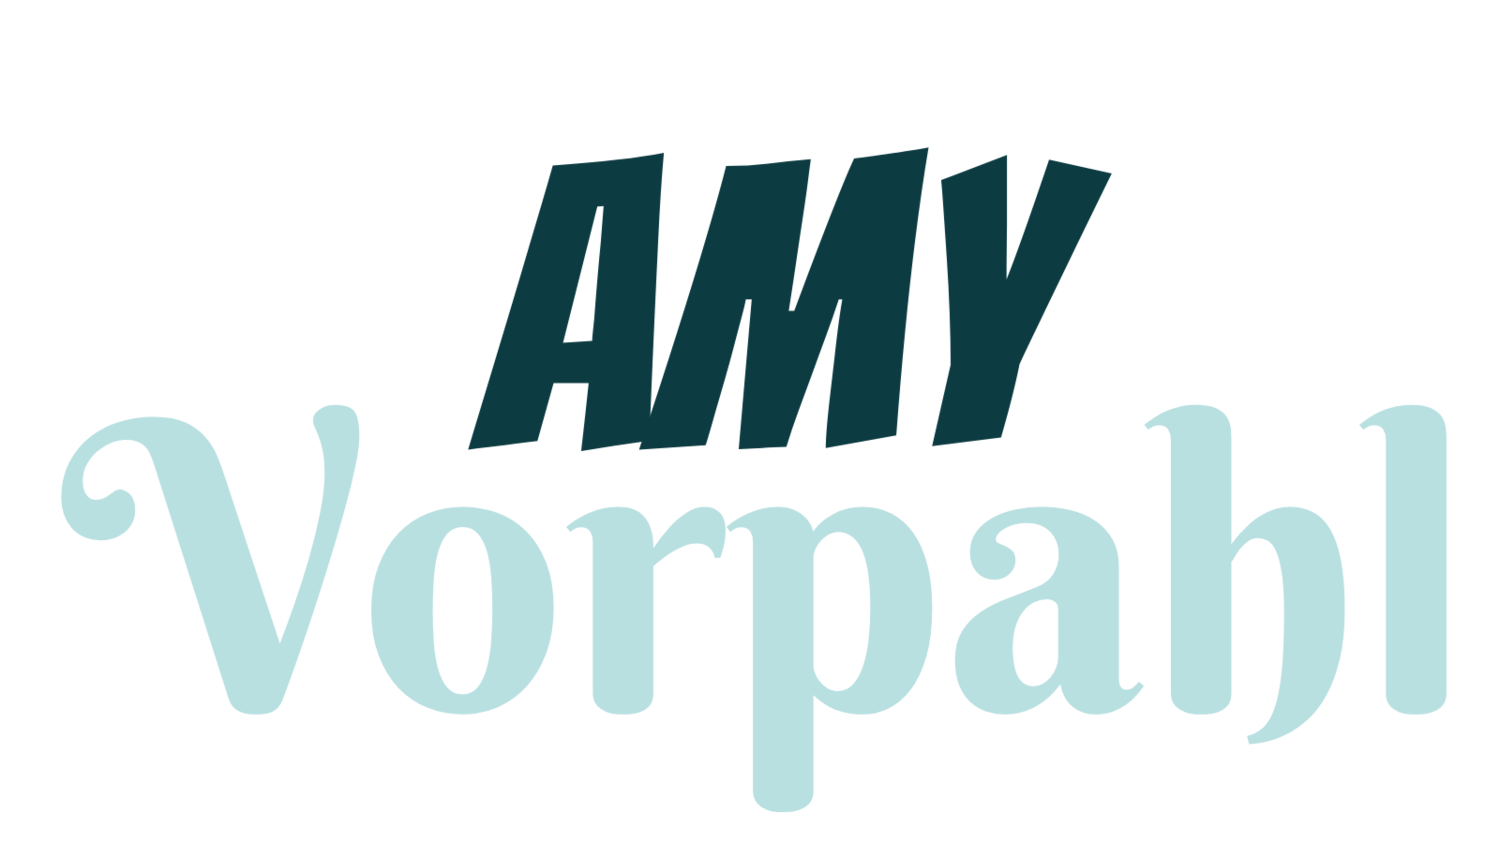 Amy Vorpahl